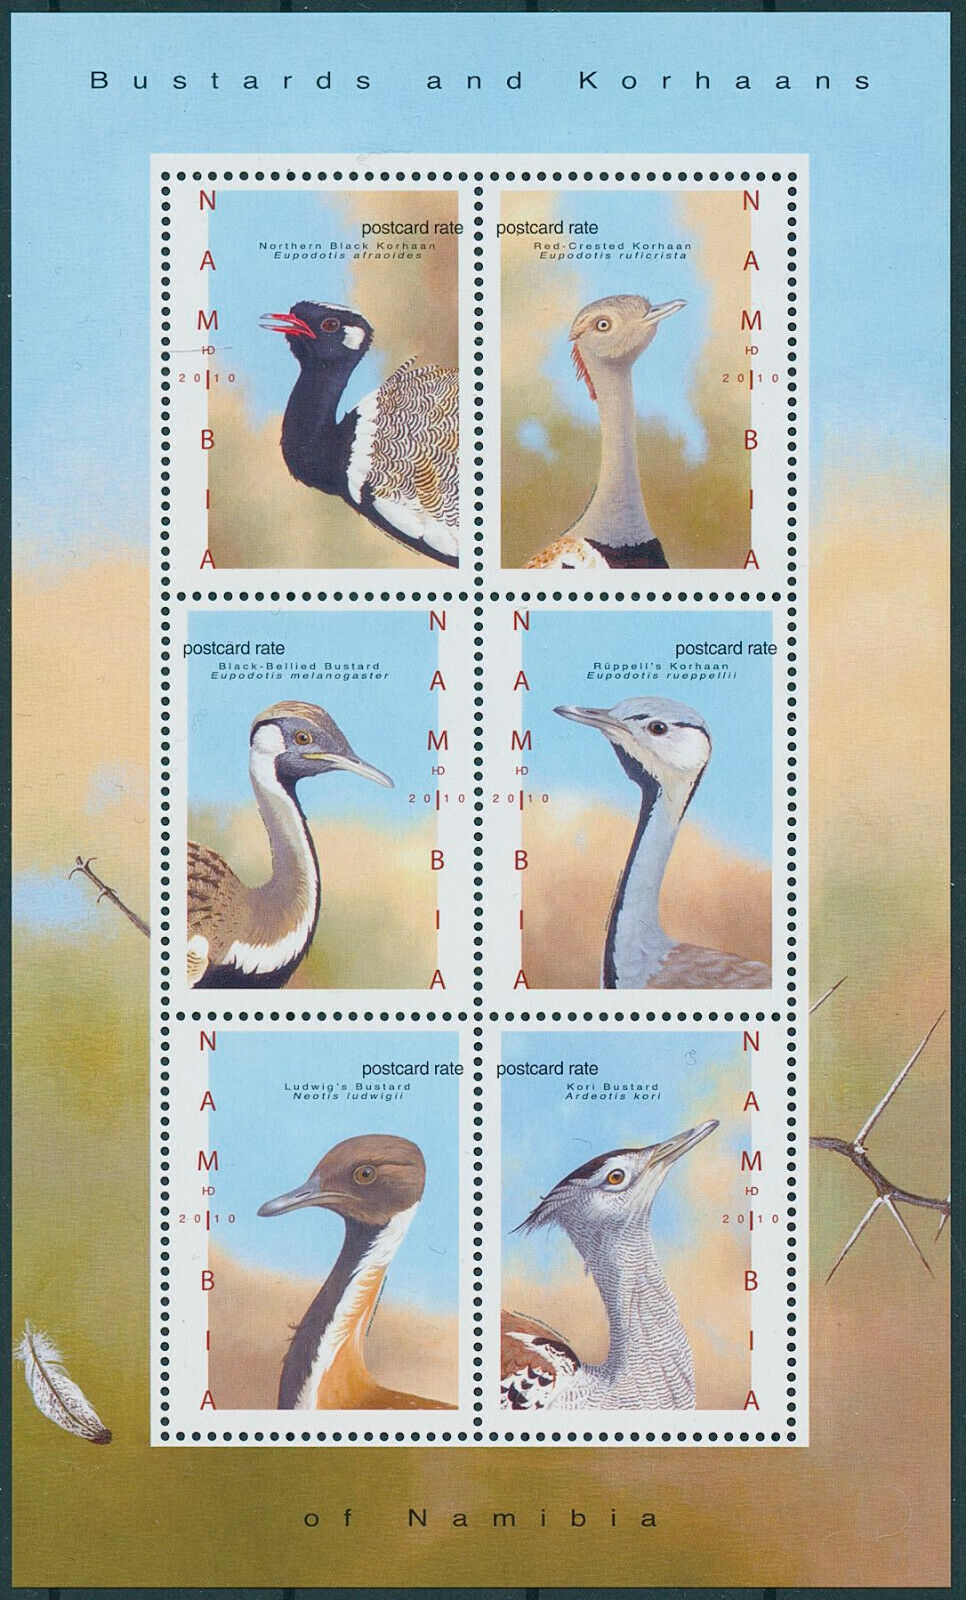 Namibia 2010 MNH Birds on Stamps Bustards & Korhaans Kori Bustard 6v M/S